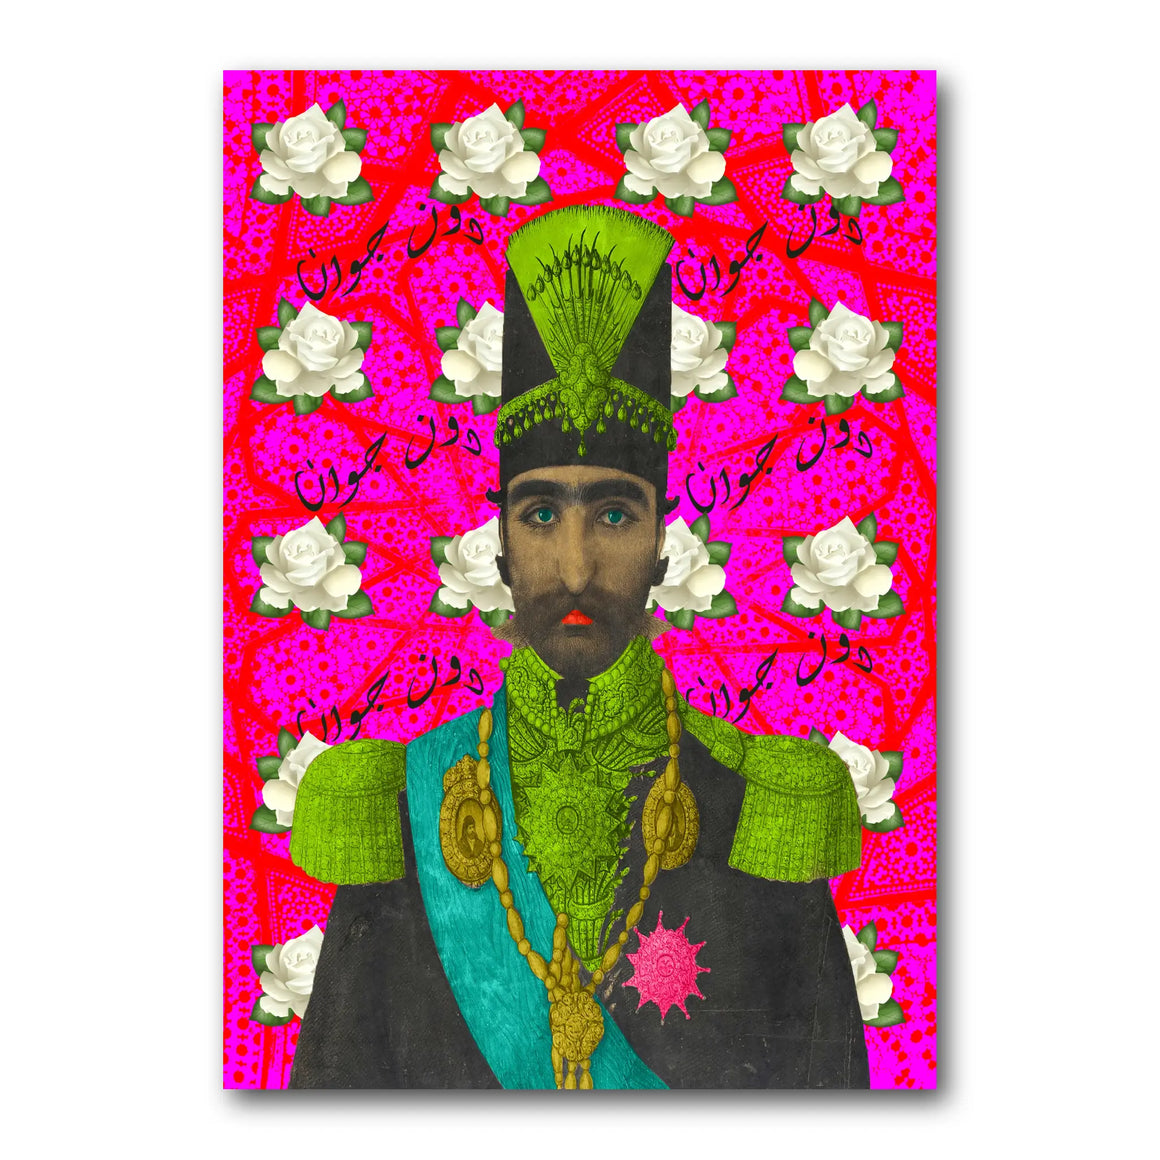 Don Juan by Zaina El Said - Digital Collage